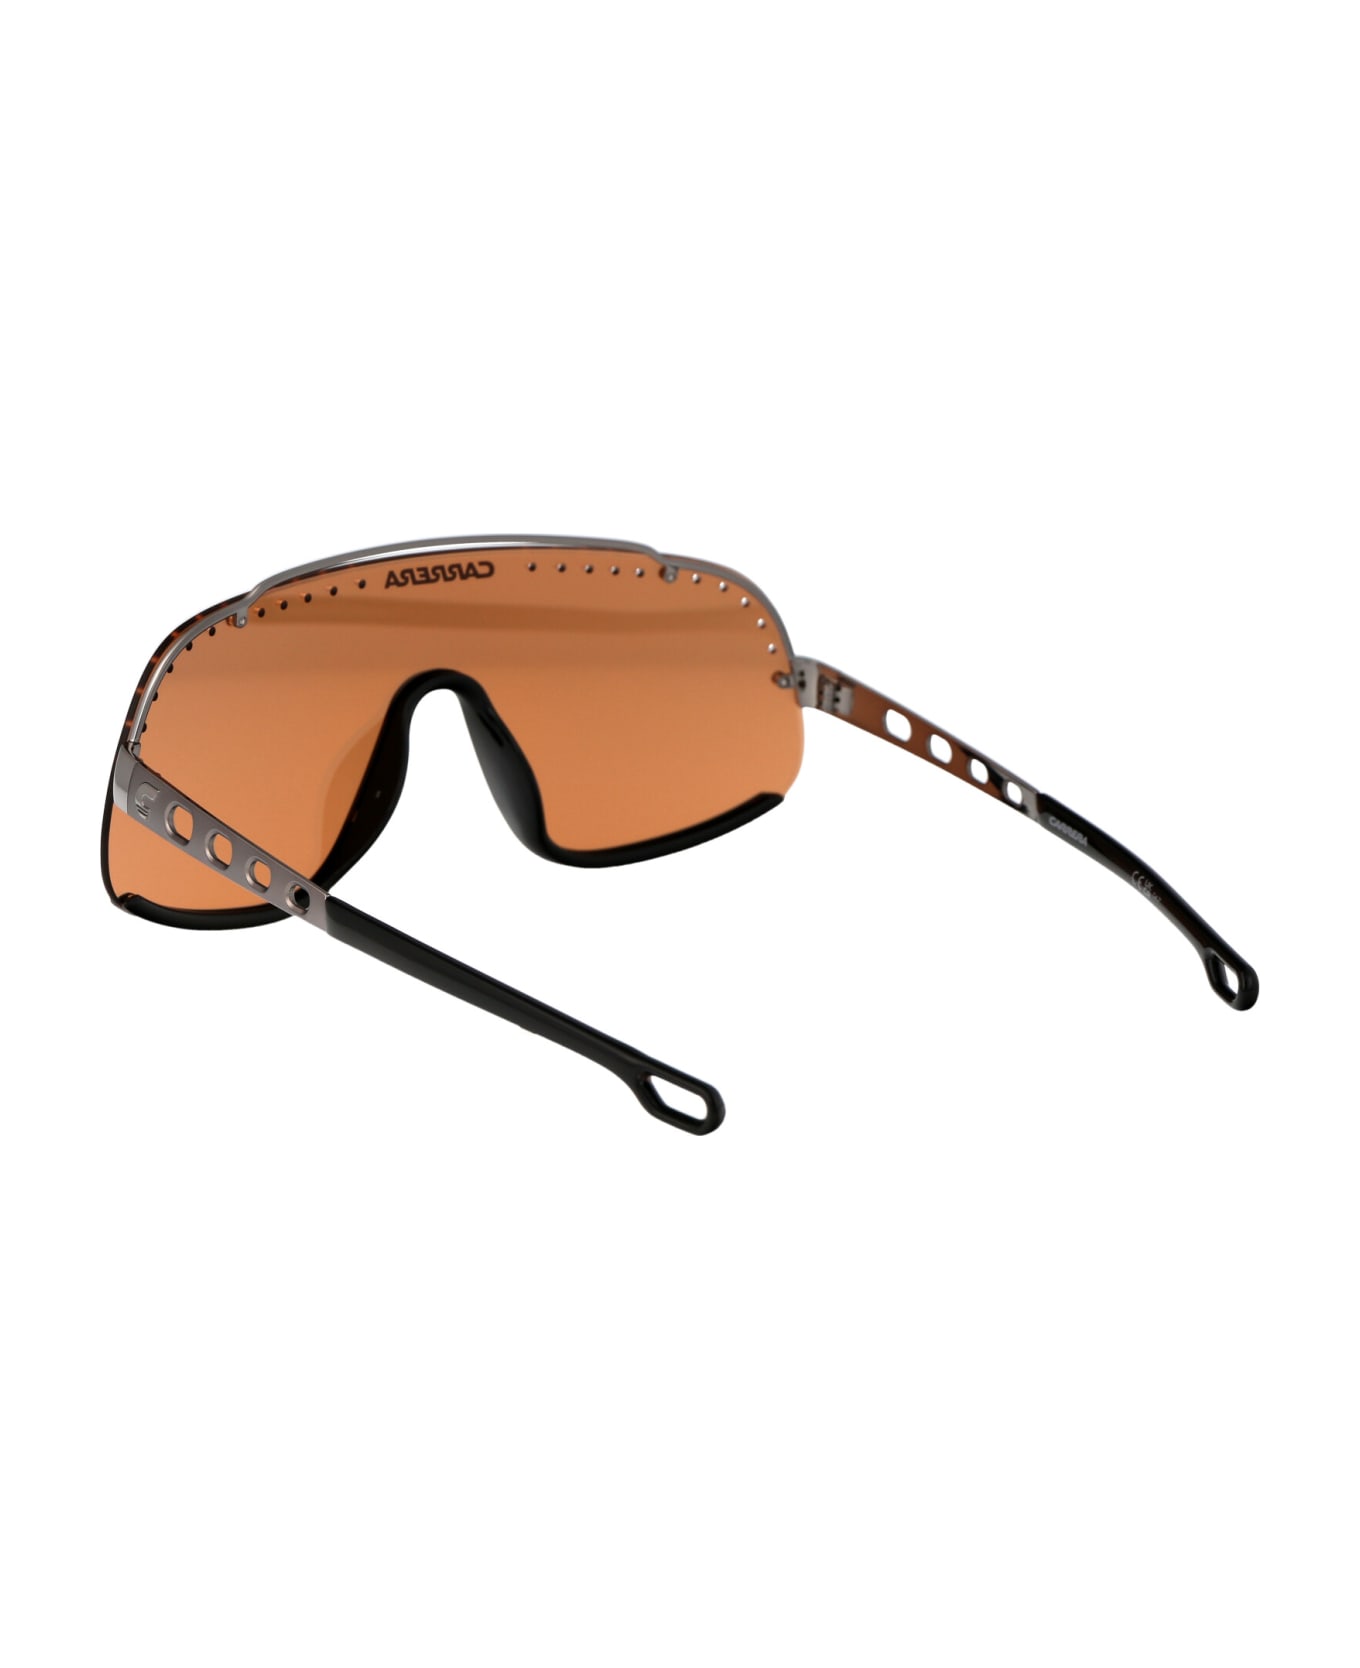 Carrera Flaglab 16 Sunglasses - 8IJDP ORN RUT サングラス